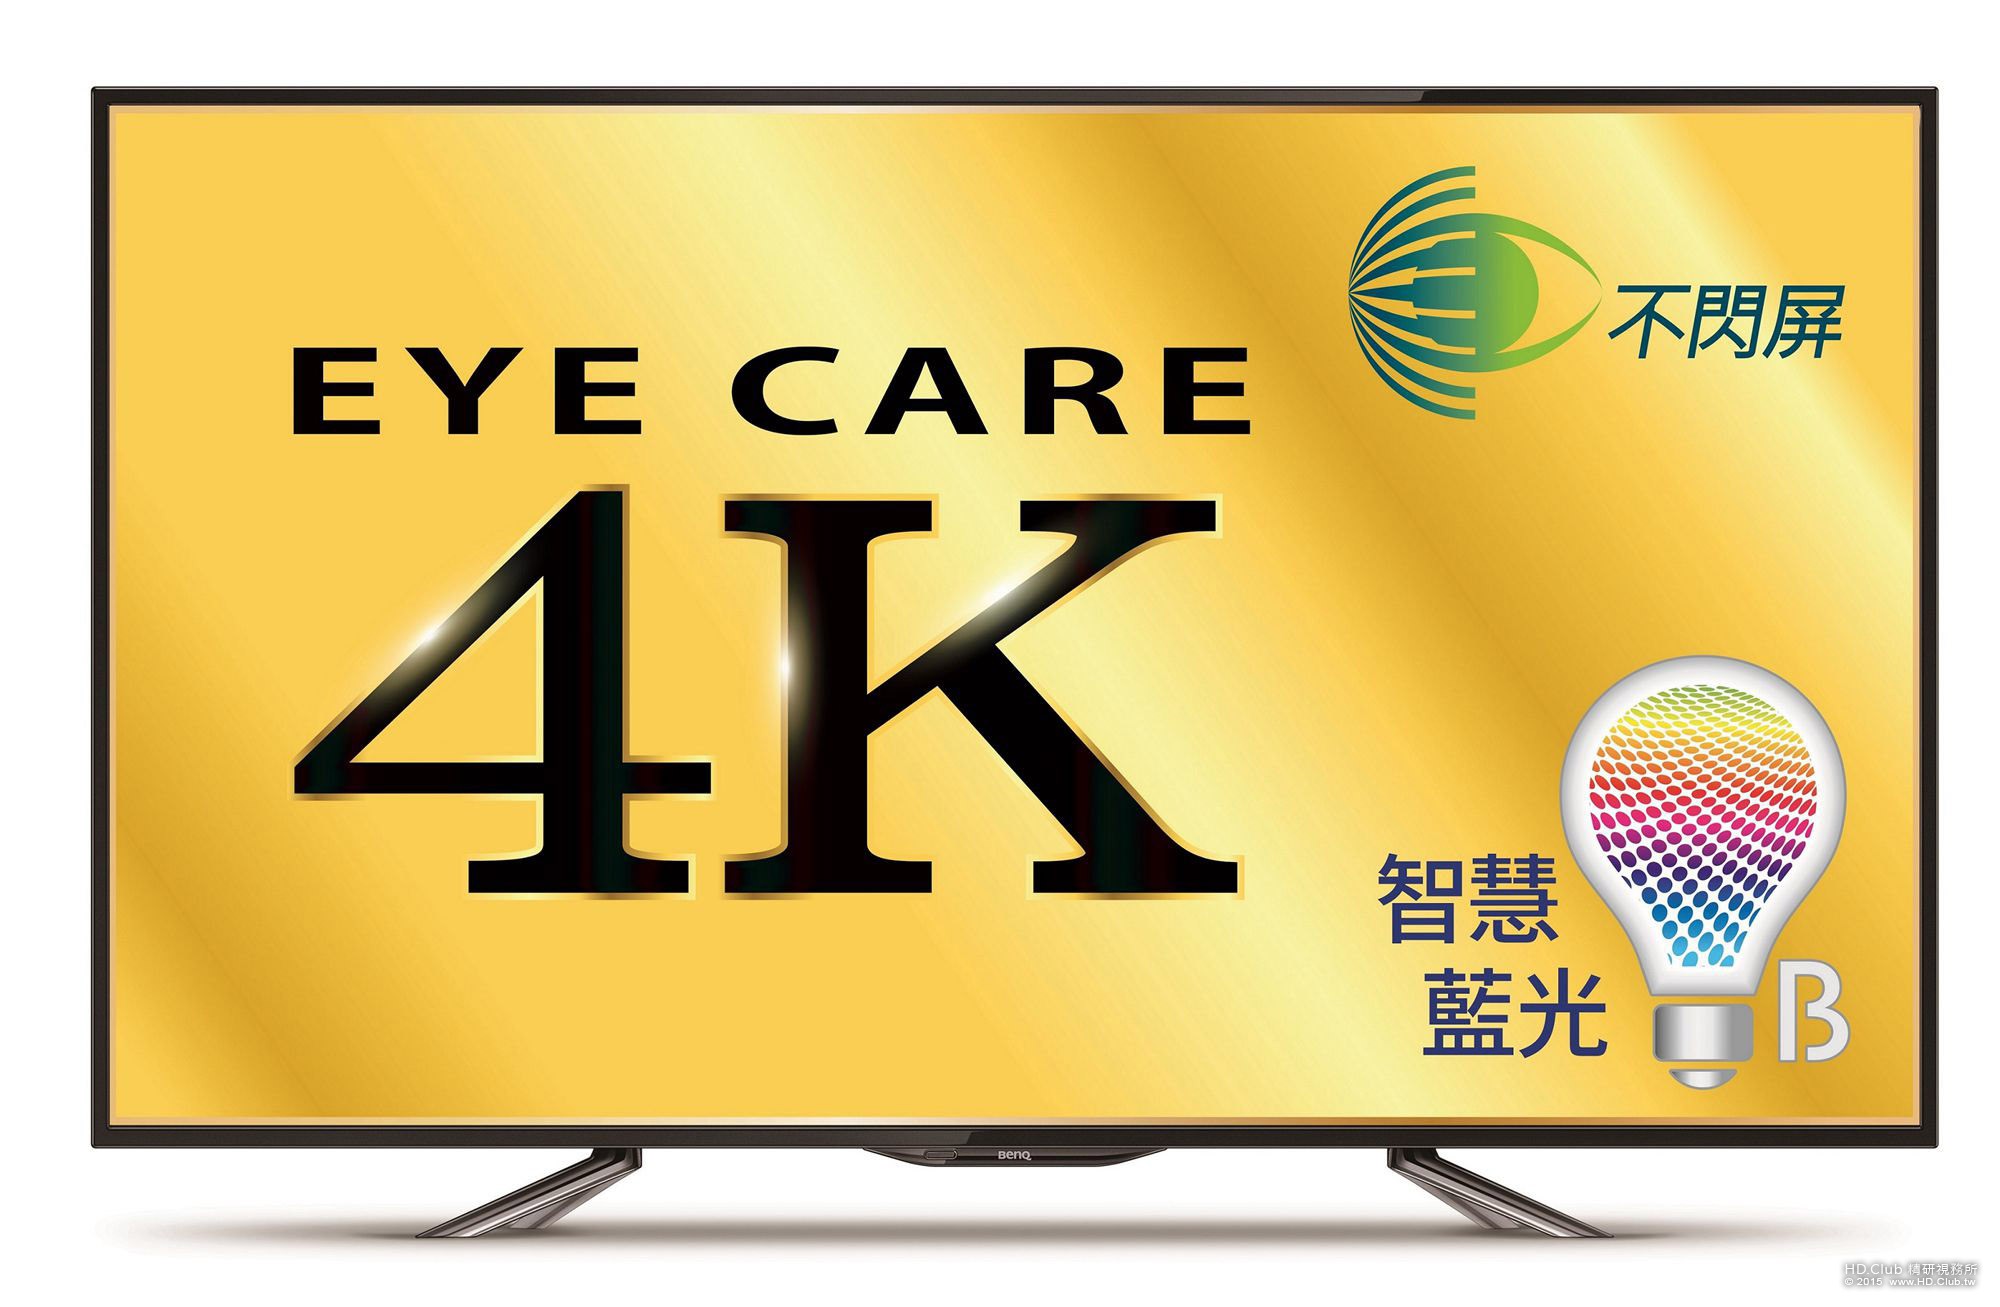 BenQ 護眼4K大型液晶55RZ7500_去背圖.jpg